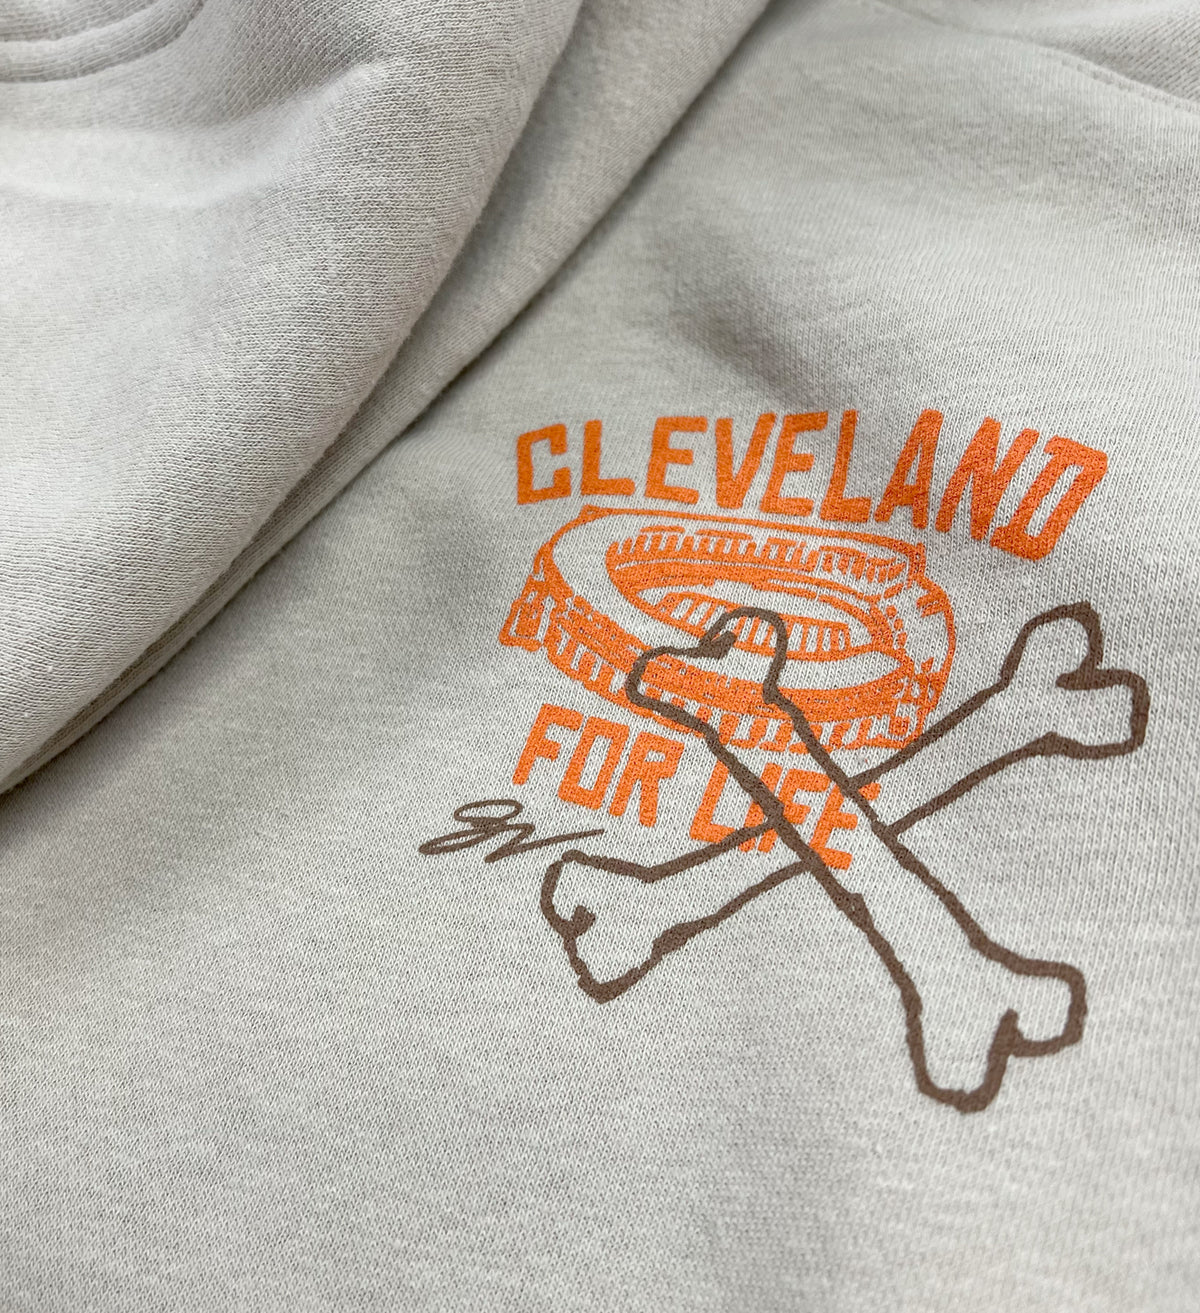 Cleveland Football For Life Beige Hooded Sweatshirt